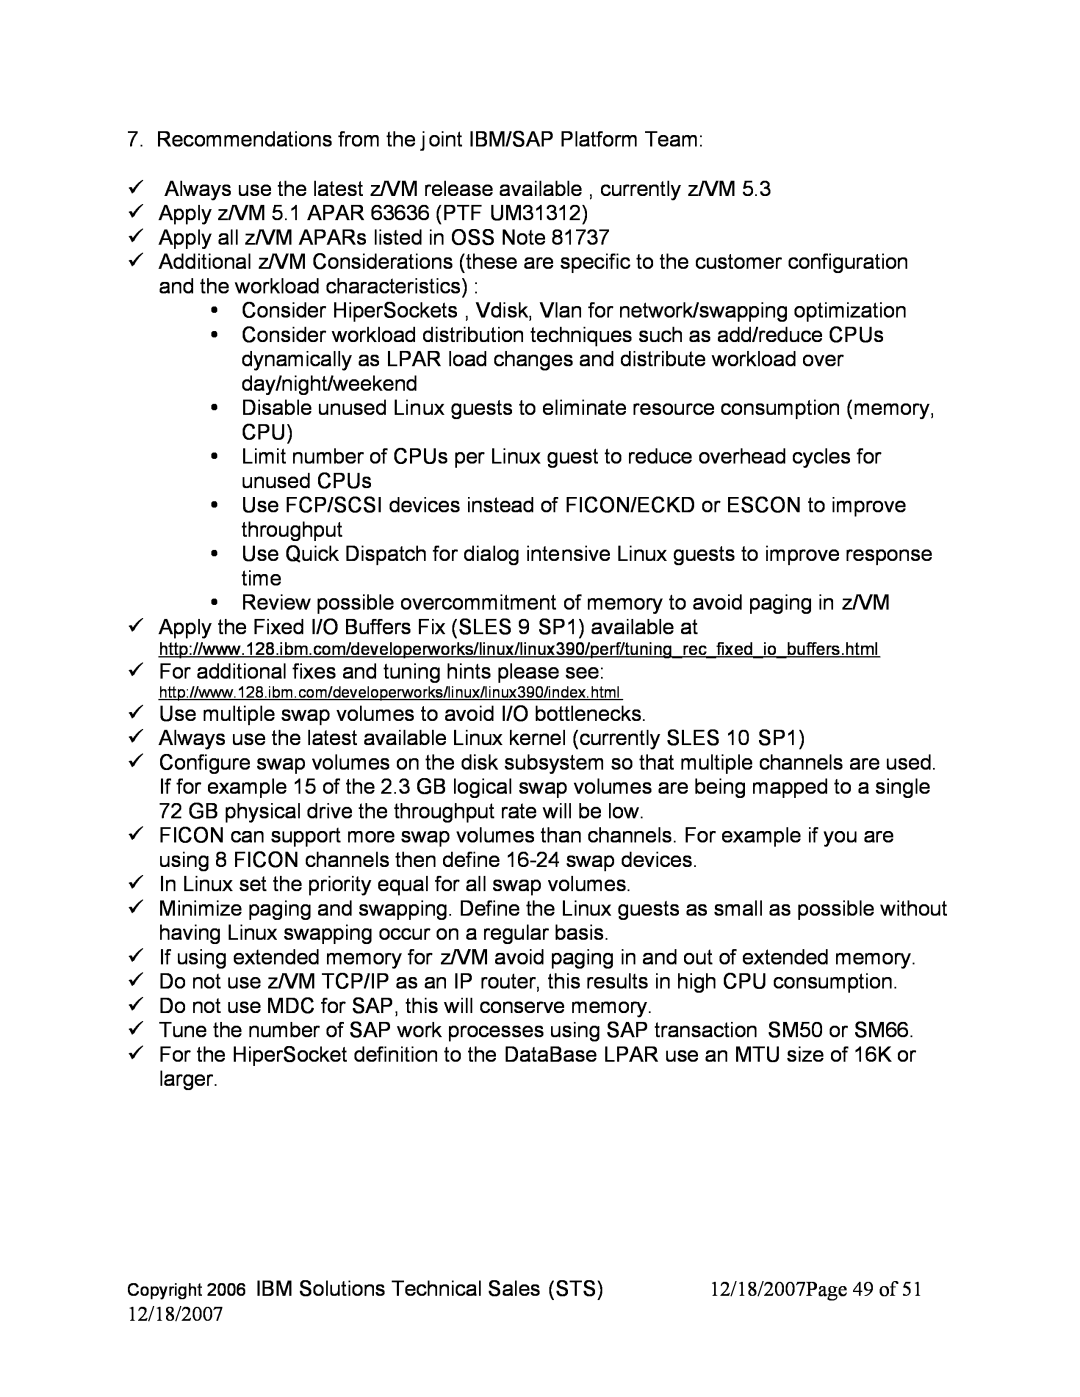 IBM DB2 V8, DB2 9 manual Apply z/VM 5.1 APAR 63636 PTF UM31312 